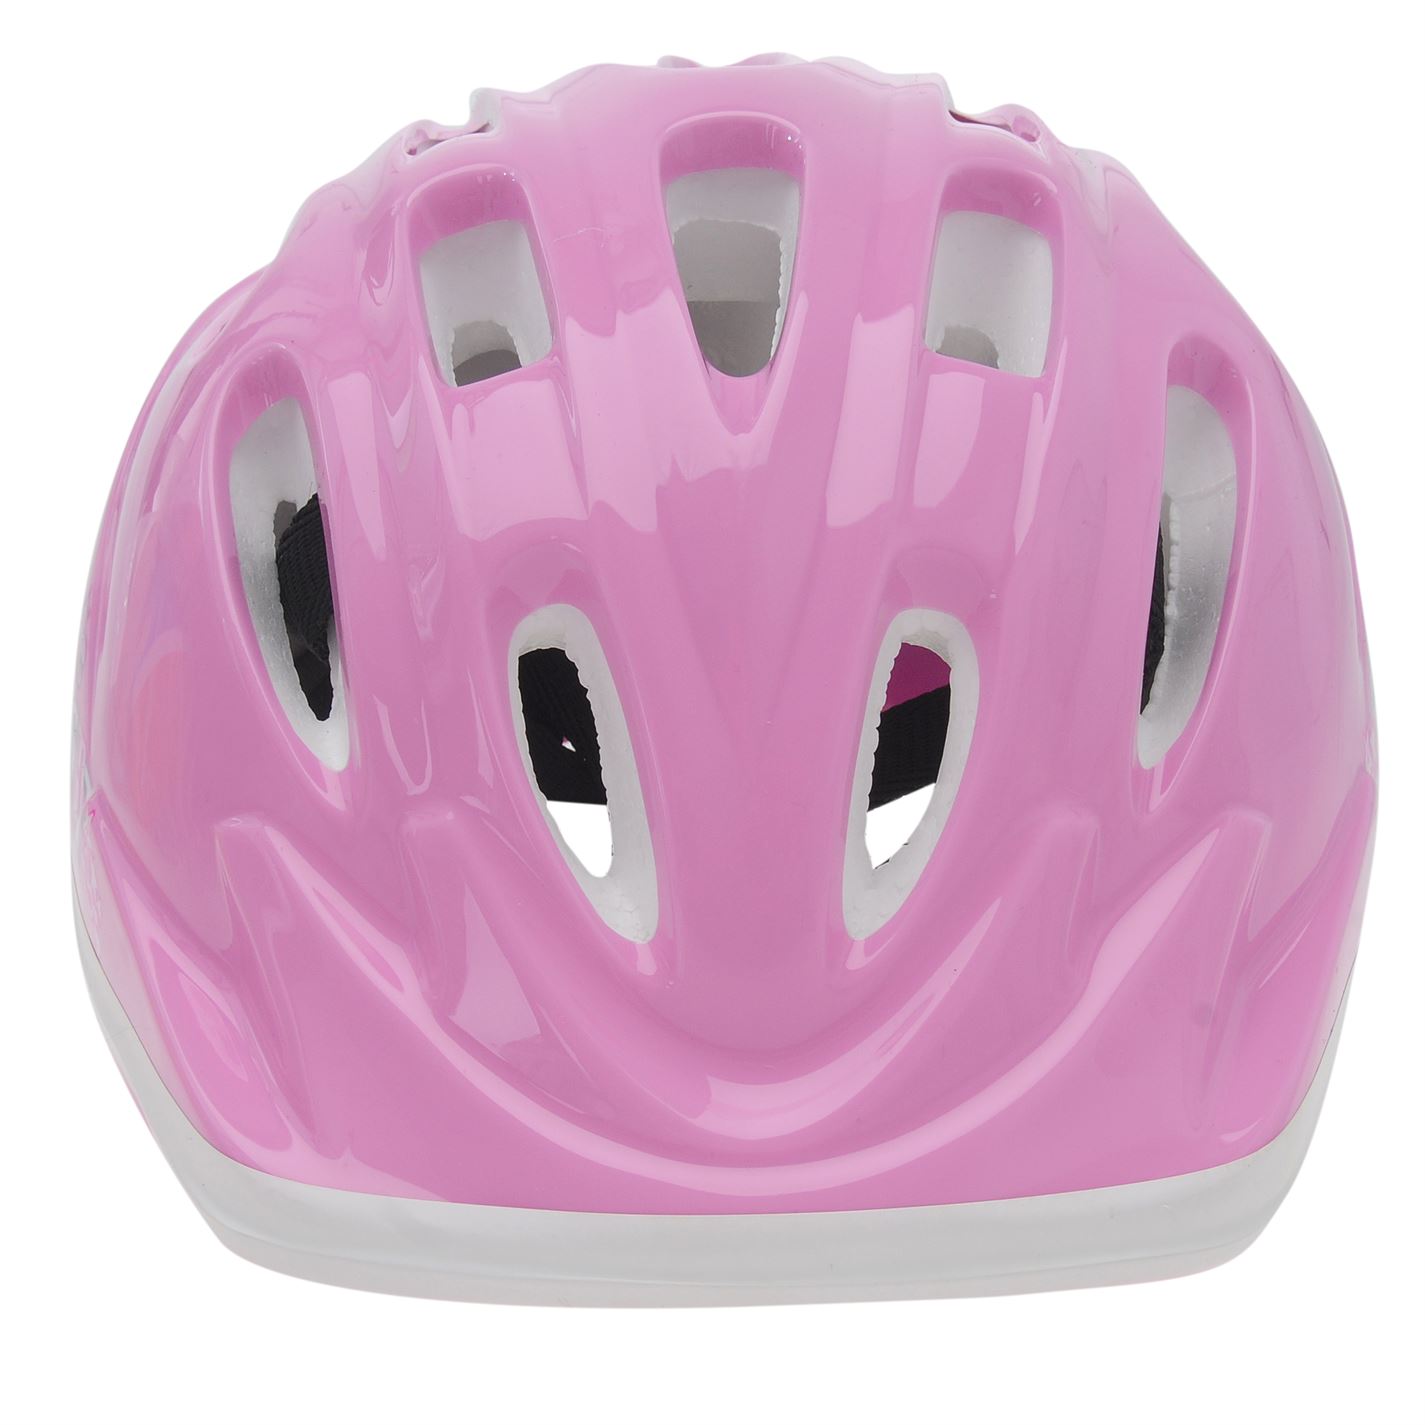 Cosmic Kids Bike Helmet and Knee Pads Set Childrens Hard Shell Protection